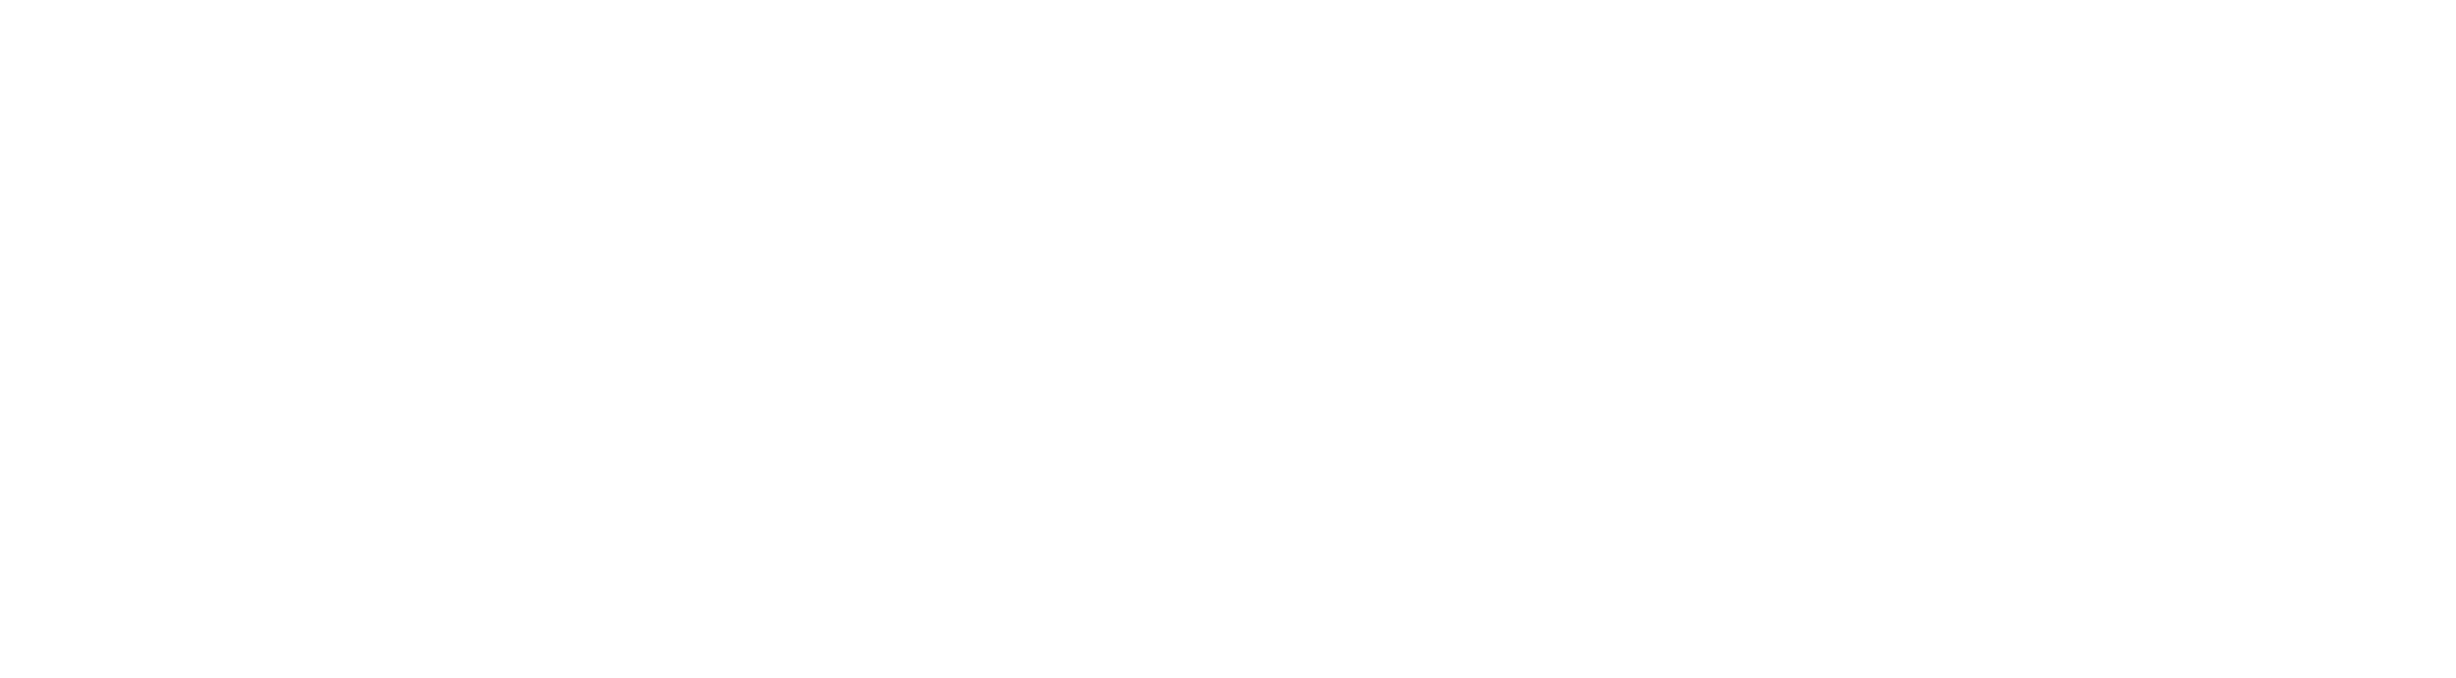 Wort-Bild-Marke MatchMedPro